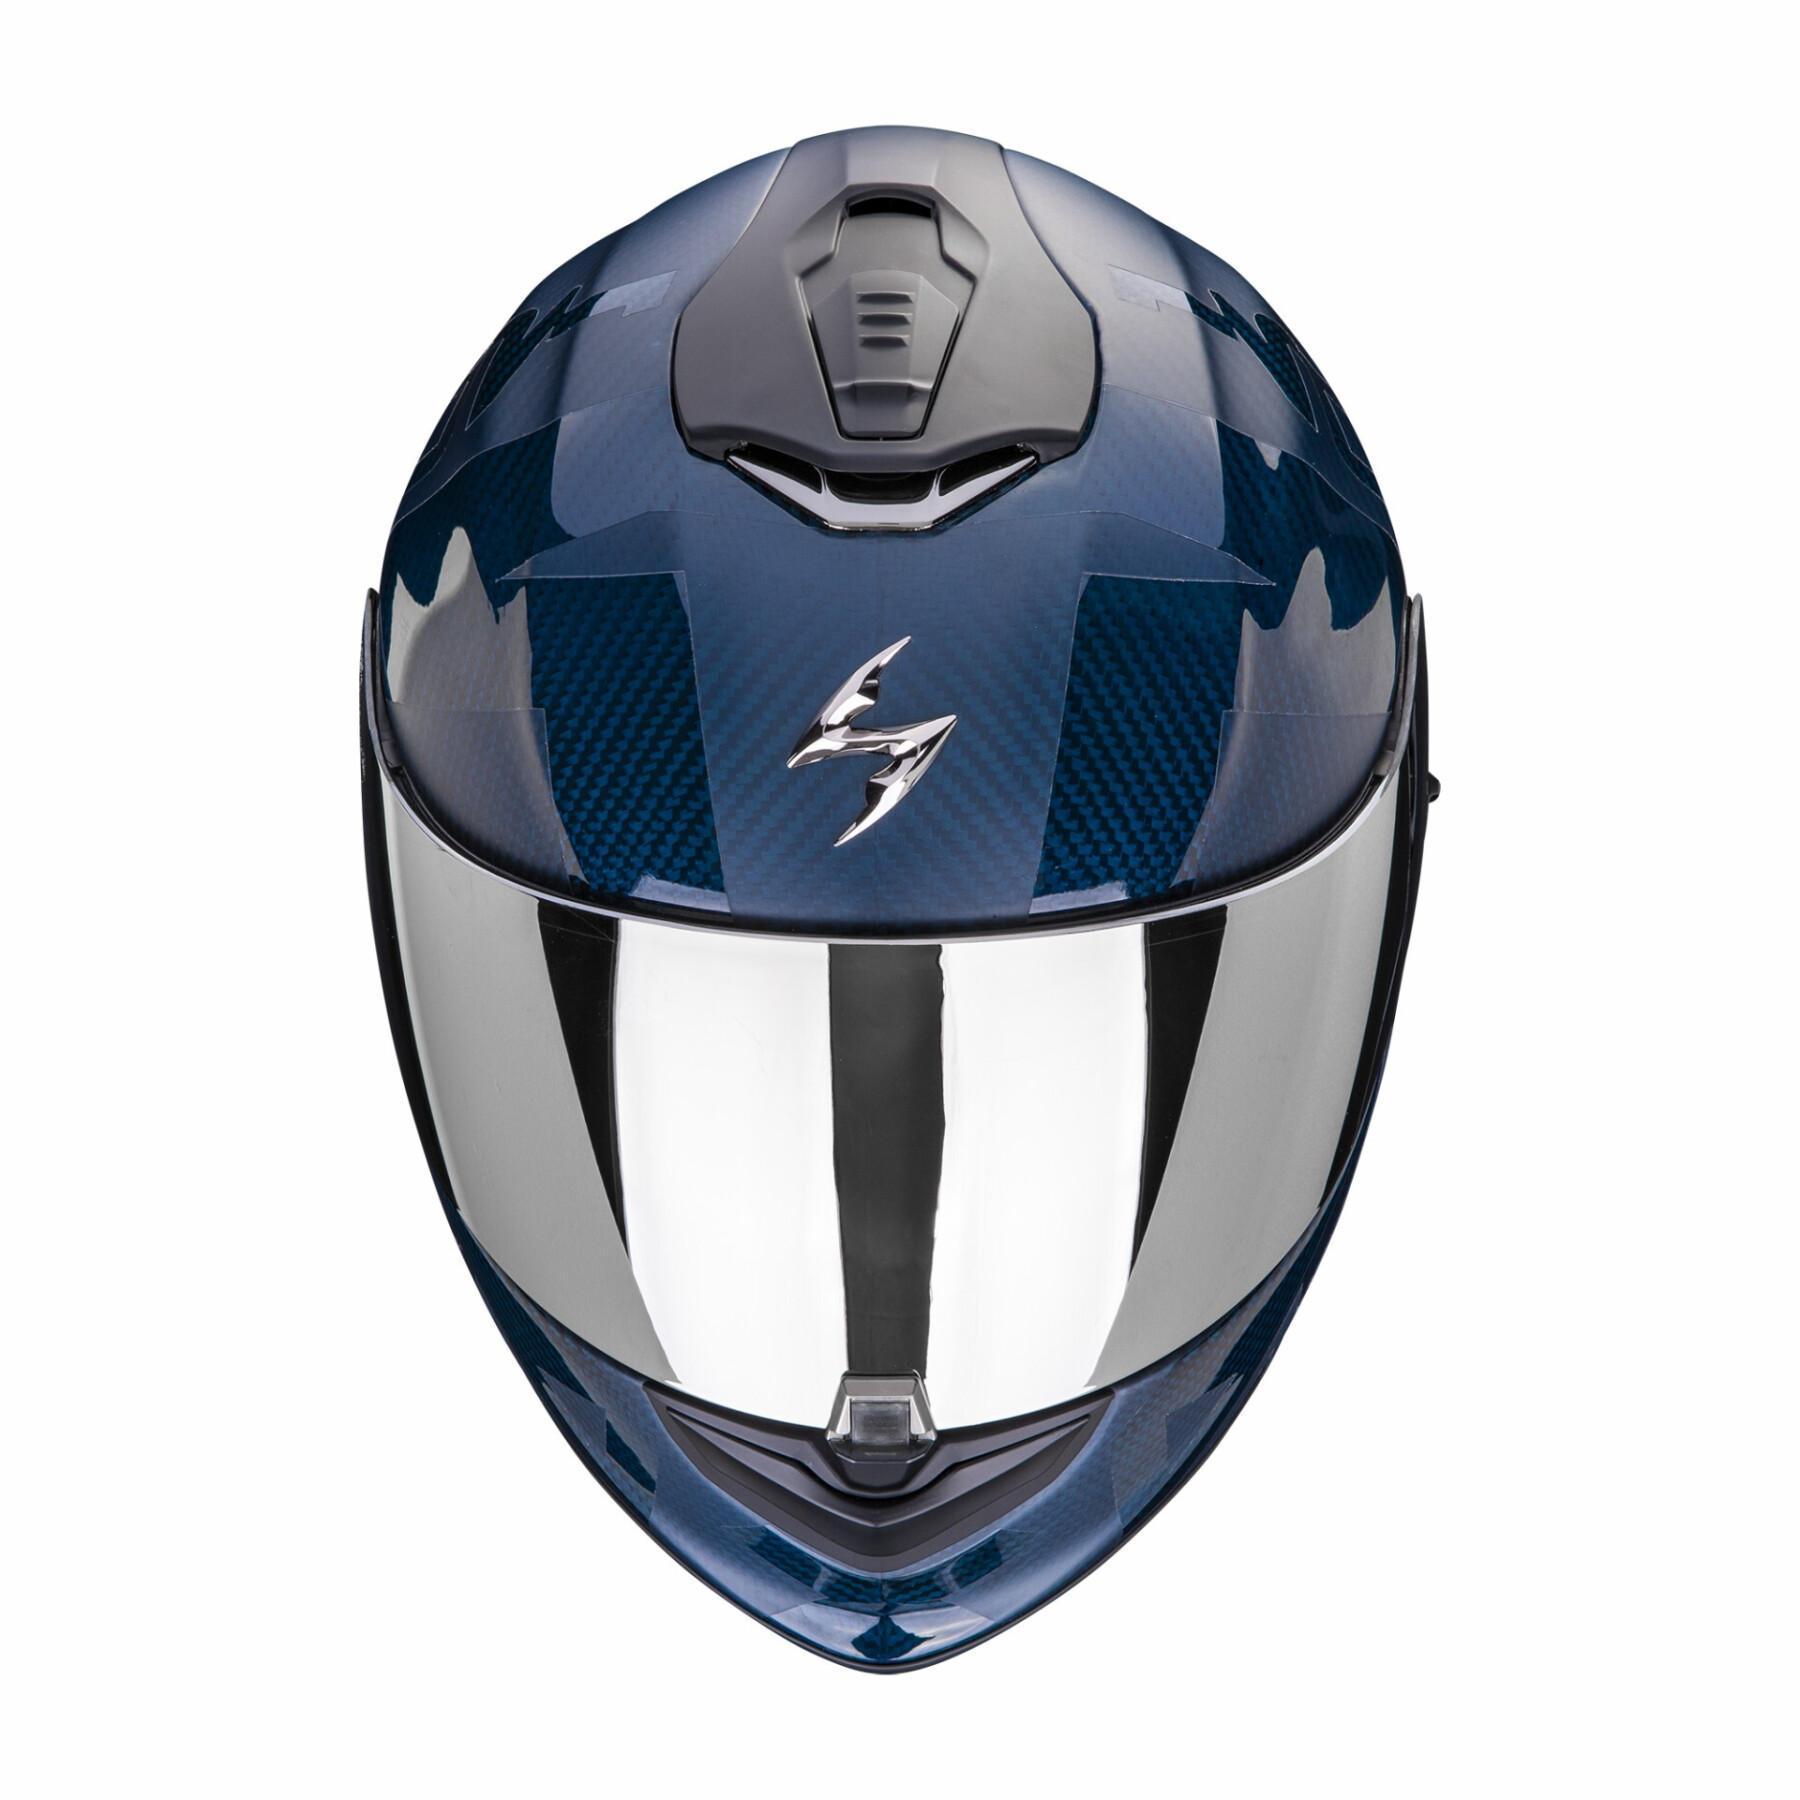 Full face motorcycle helmet Scorpion Exo-1400 Evo Carbon Air Cerebro ECE 22-06